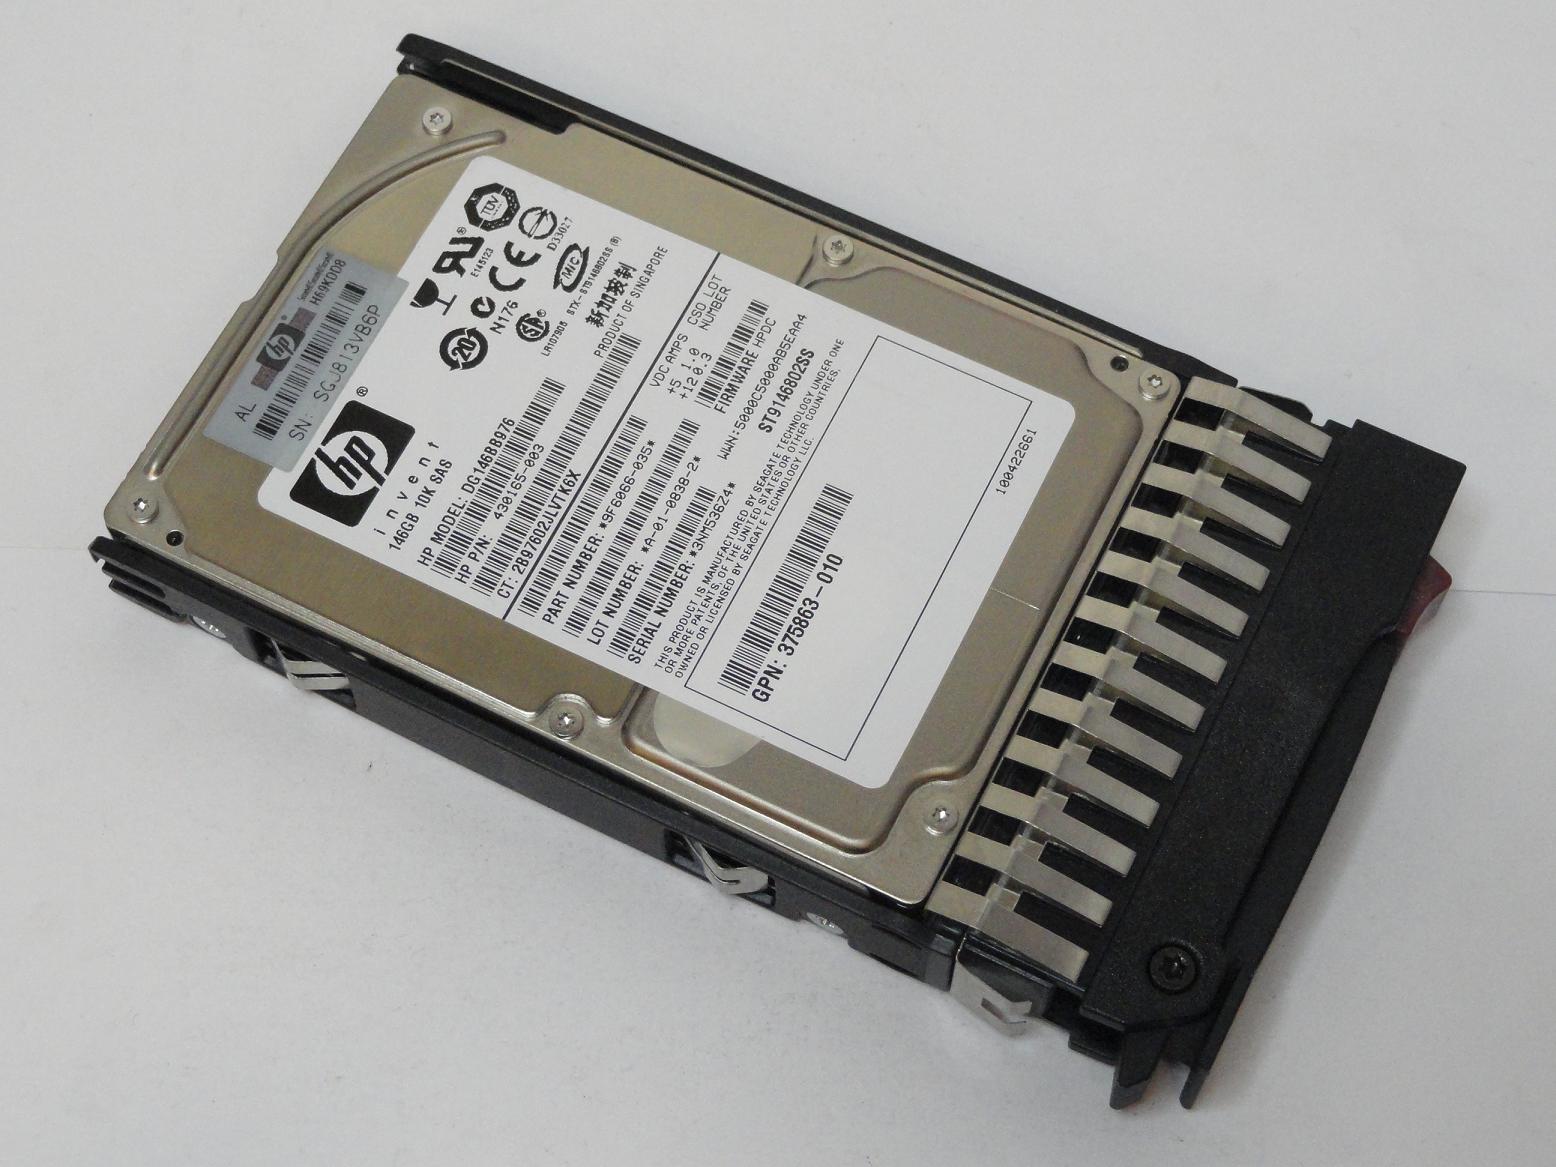 9F6066-035 - Seagate HP 146GB SAS 10Krpm 2.5in HDD in Caddy - Refurbished